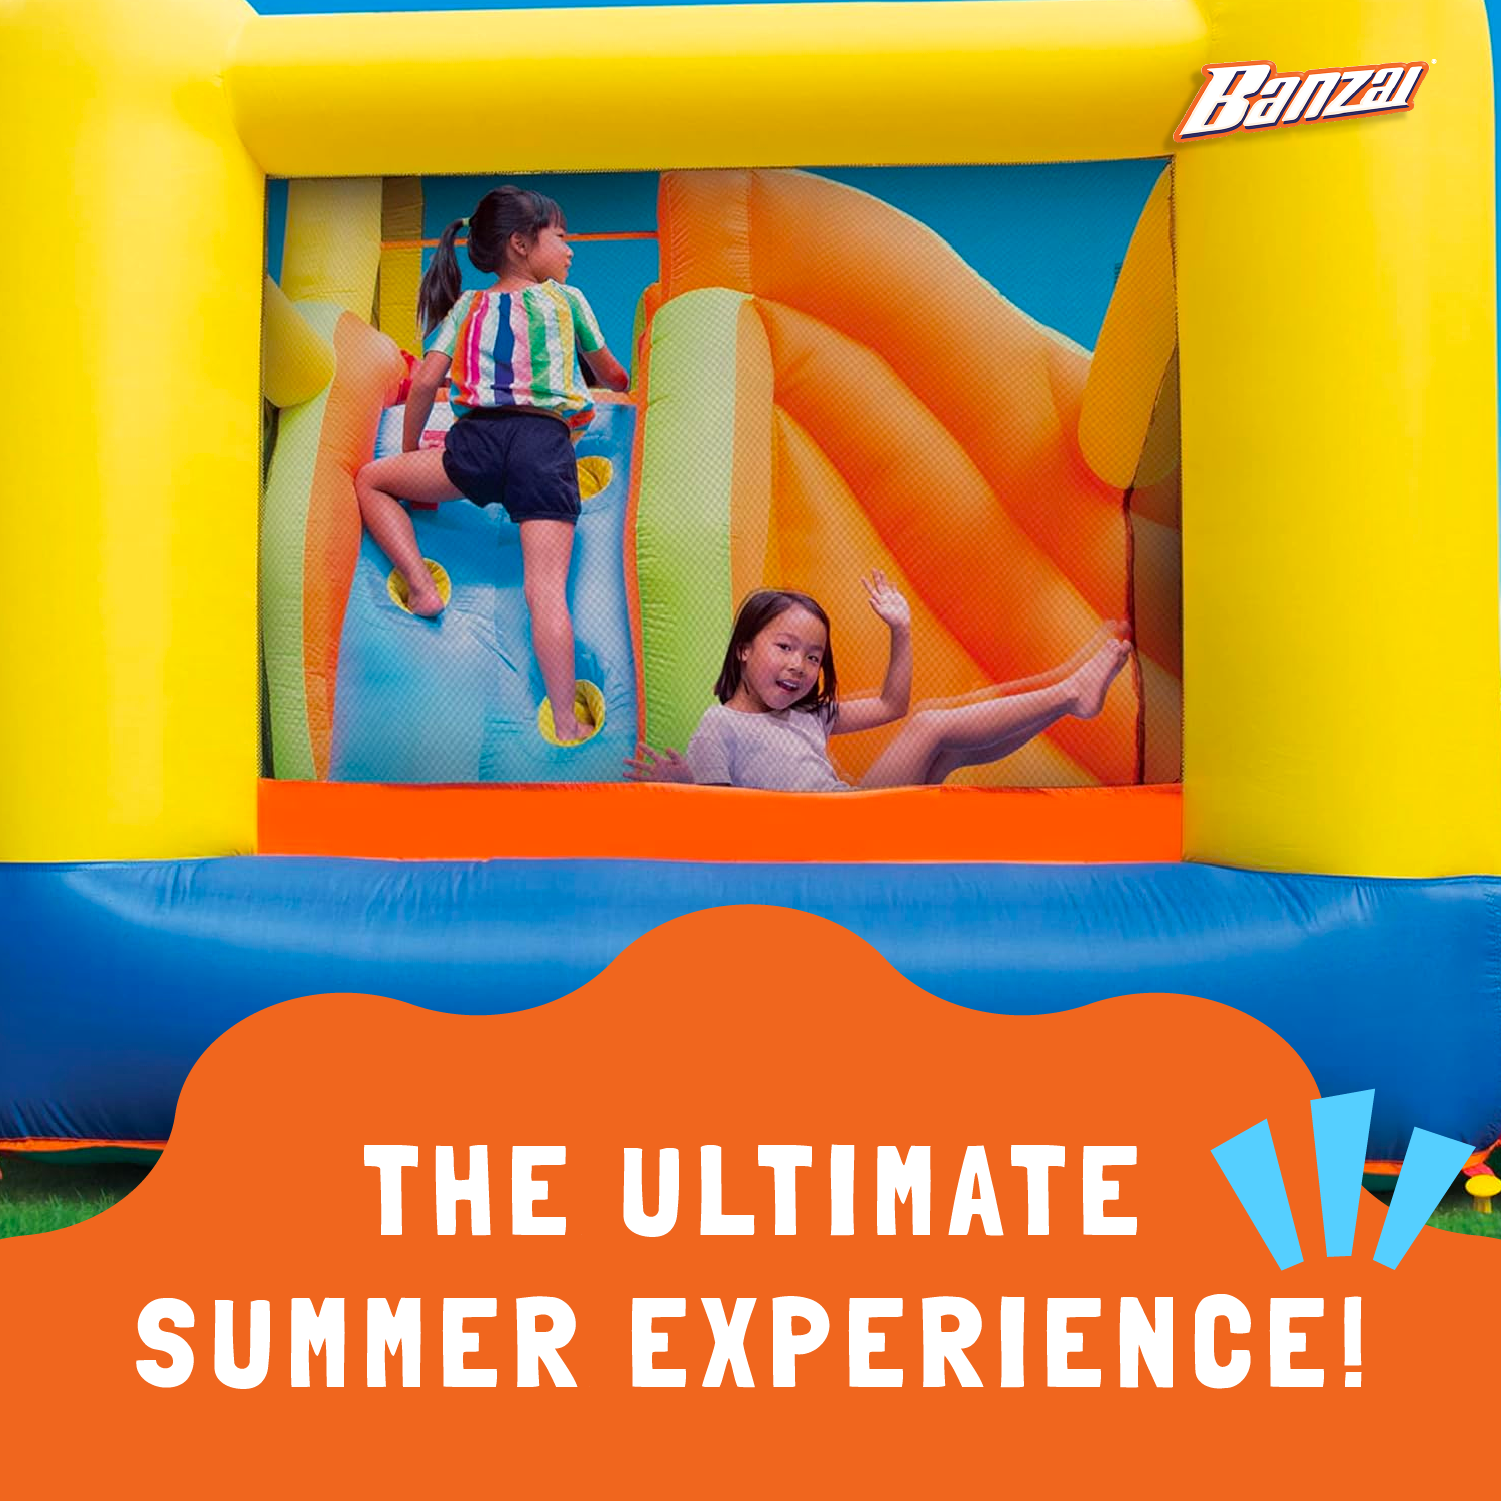 Banzai Sun 'N Splash Fun Kids Inflatable Bounce House and Water Slide Park - image 5 of 11